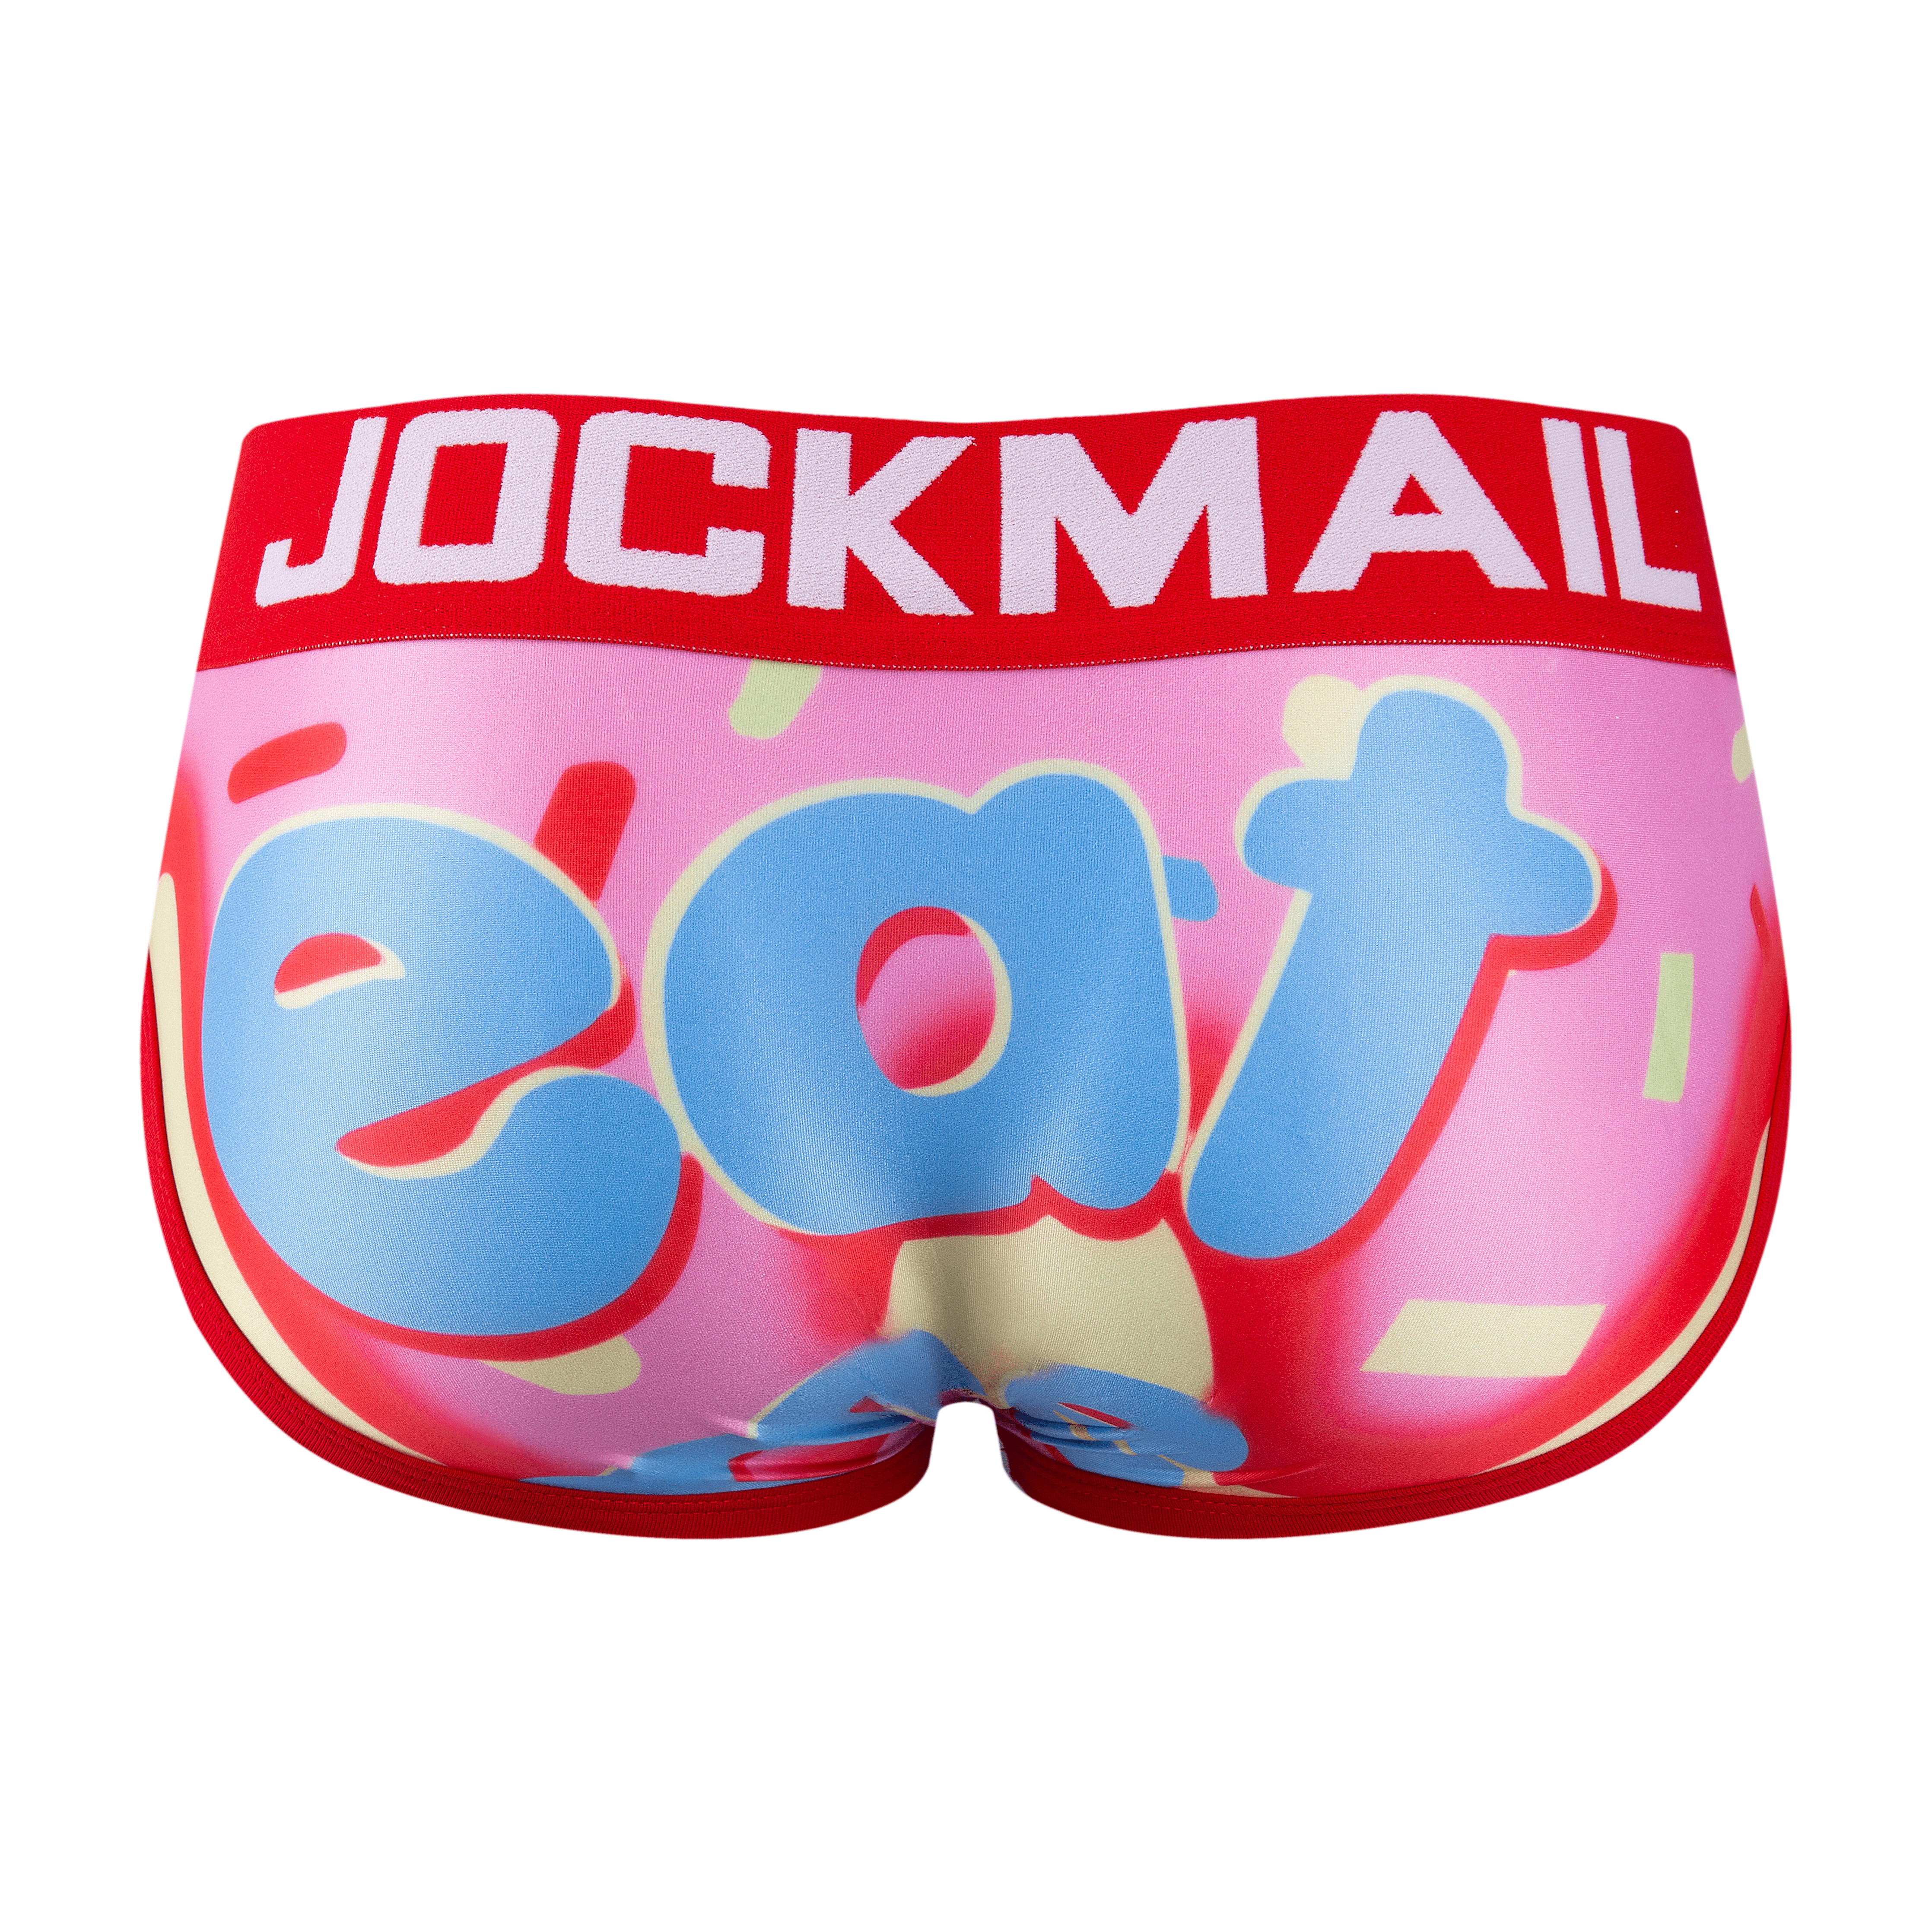 Men's JOCKMAIL JM335 - Eat Cake Brief - JOCKMAIL